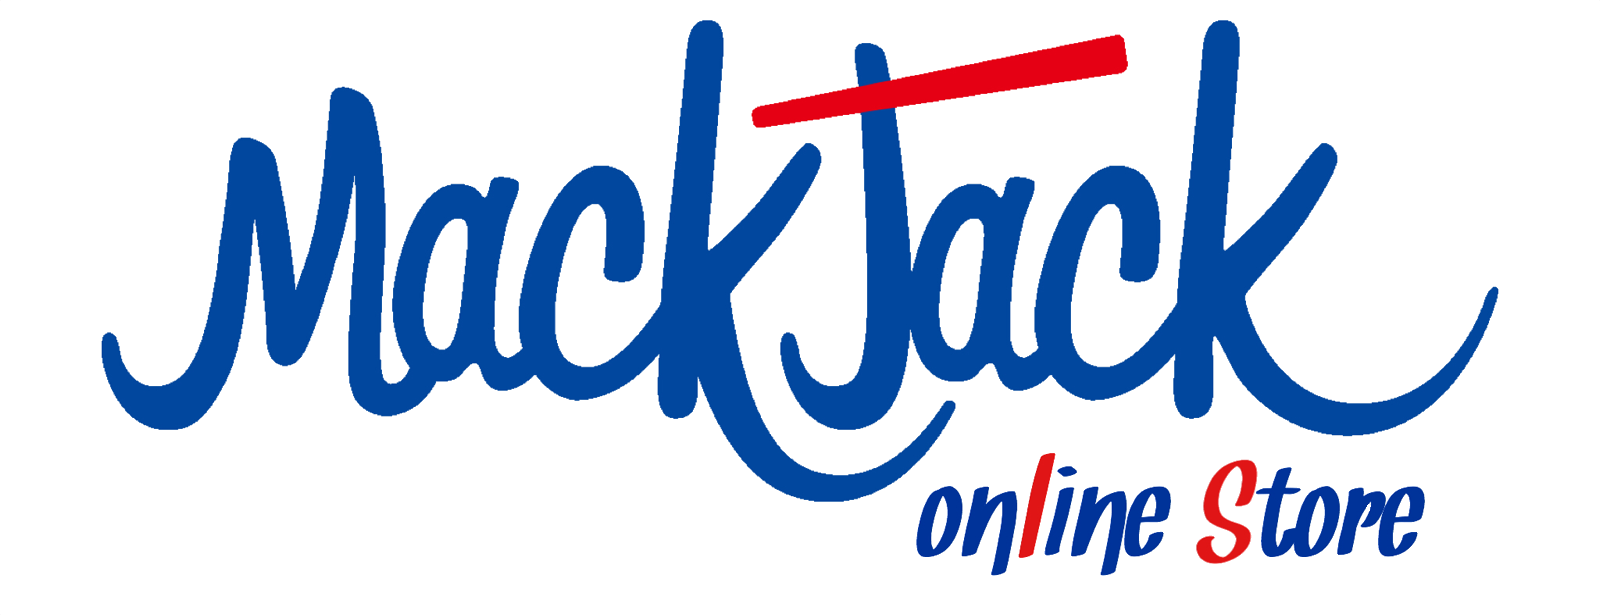 MACKJACK store